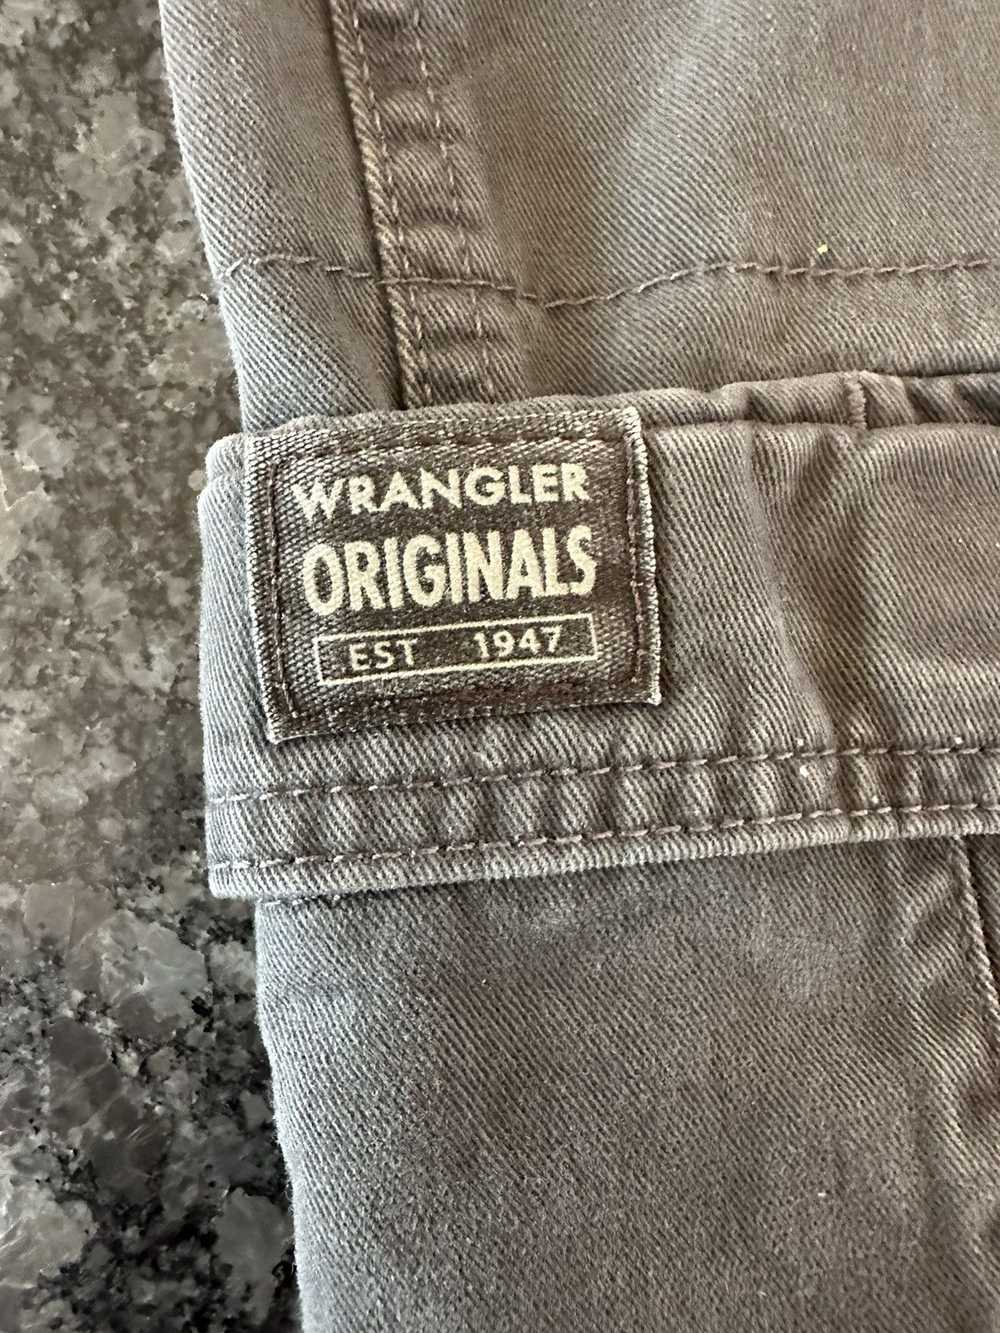 Vintage × Wrangler Wrangler Originals cargo pants - image 2